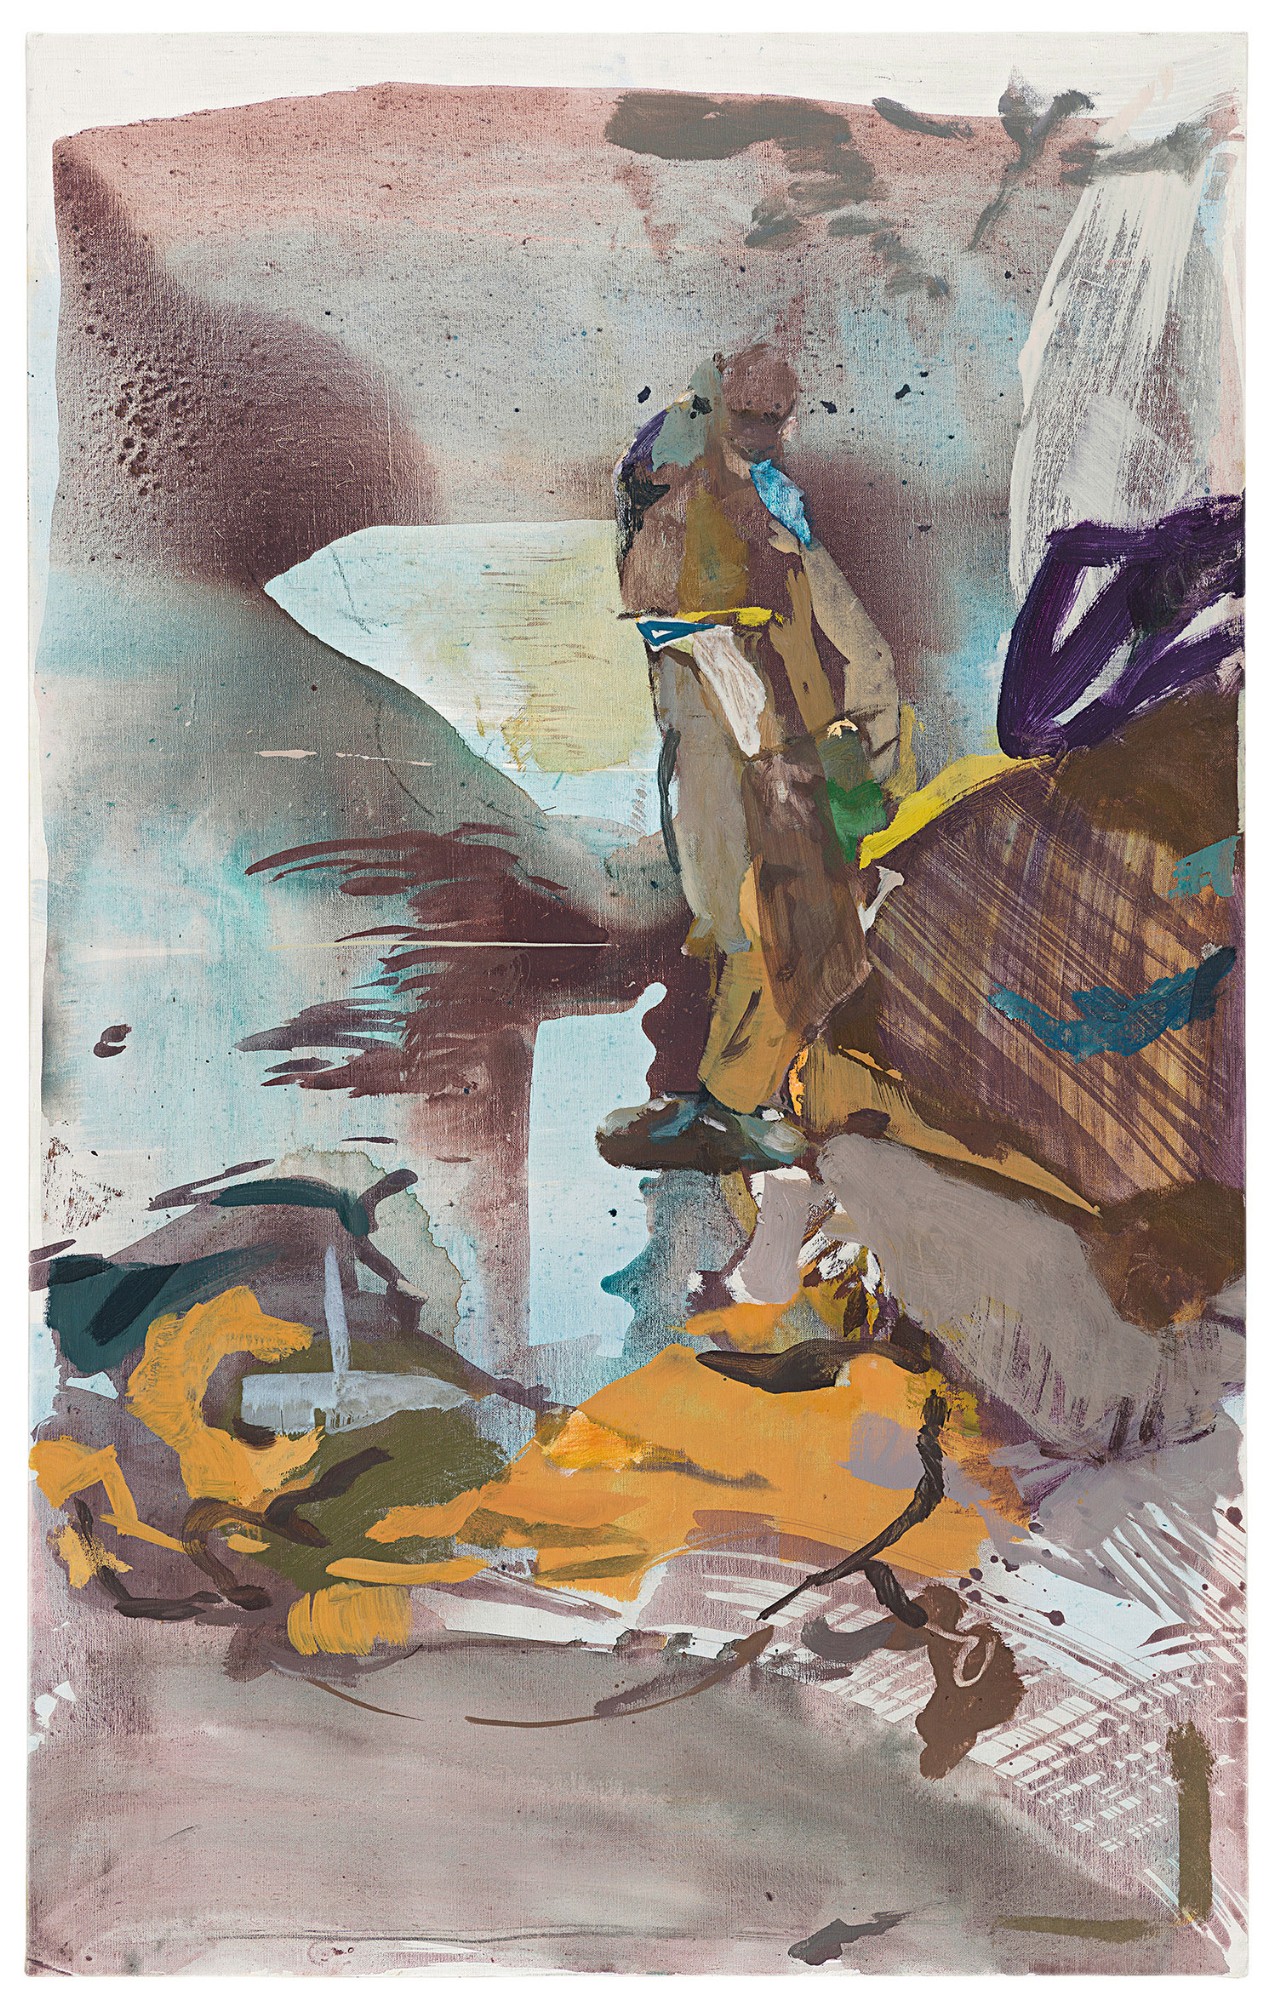 Maki Na Kamura, OM I, 2021, oil, egg tempera on canvas, 160 x 100 cm